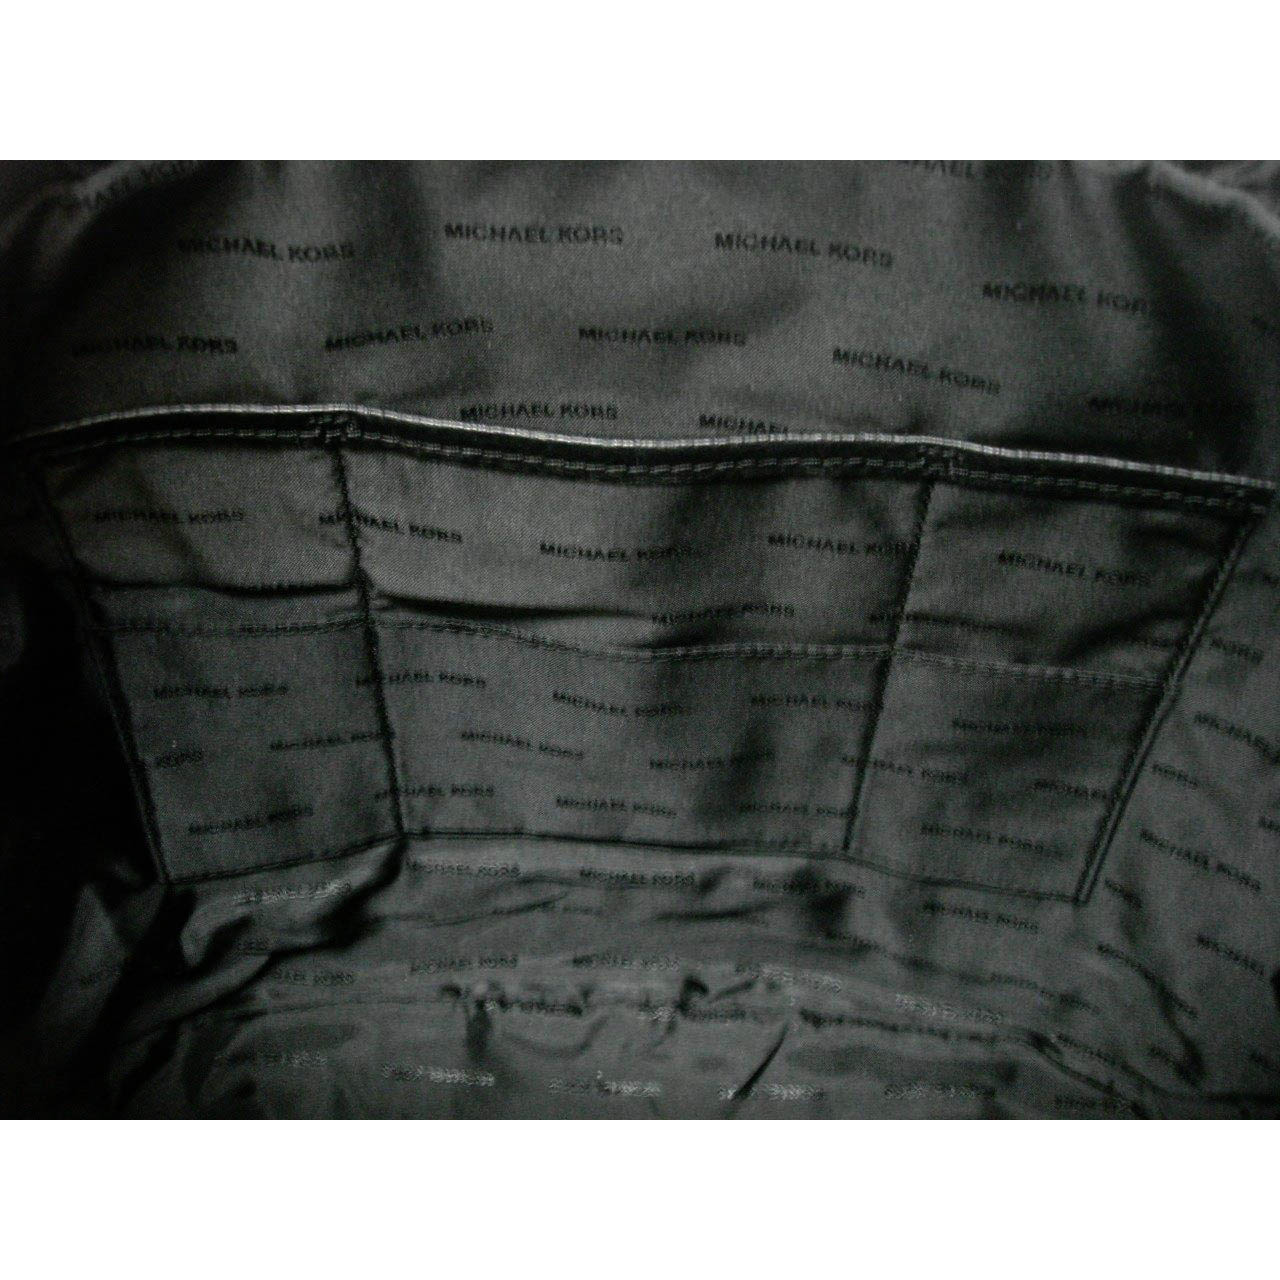 Michael Kors Bedford Belted Medium Leather Satchel Crossbody Bag Black # 38S7GBFS2L